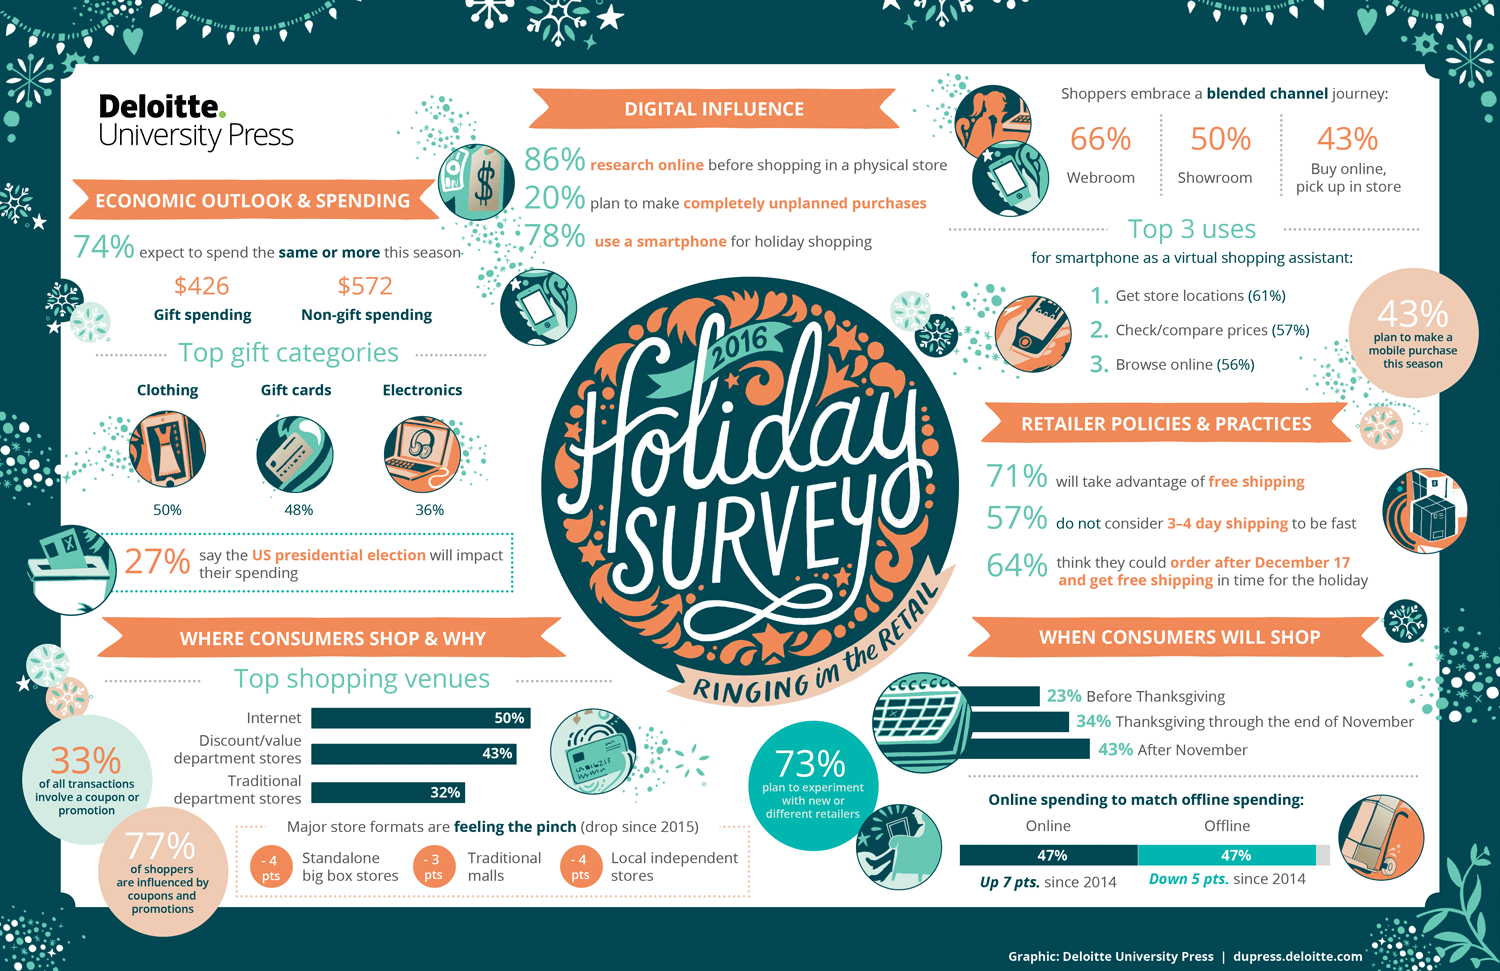 Deloitte's 2016 holiday survey